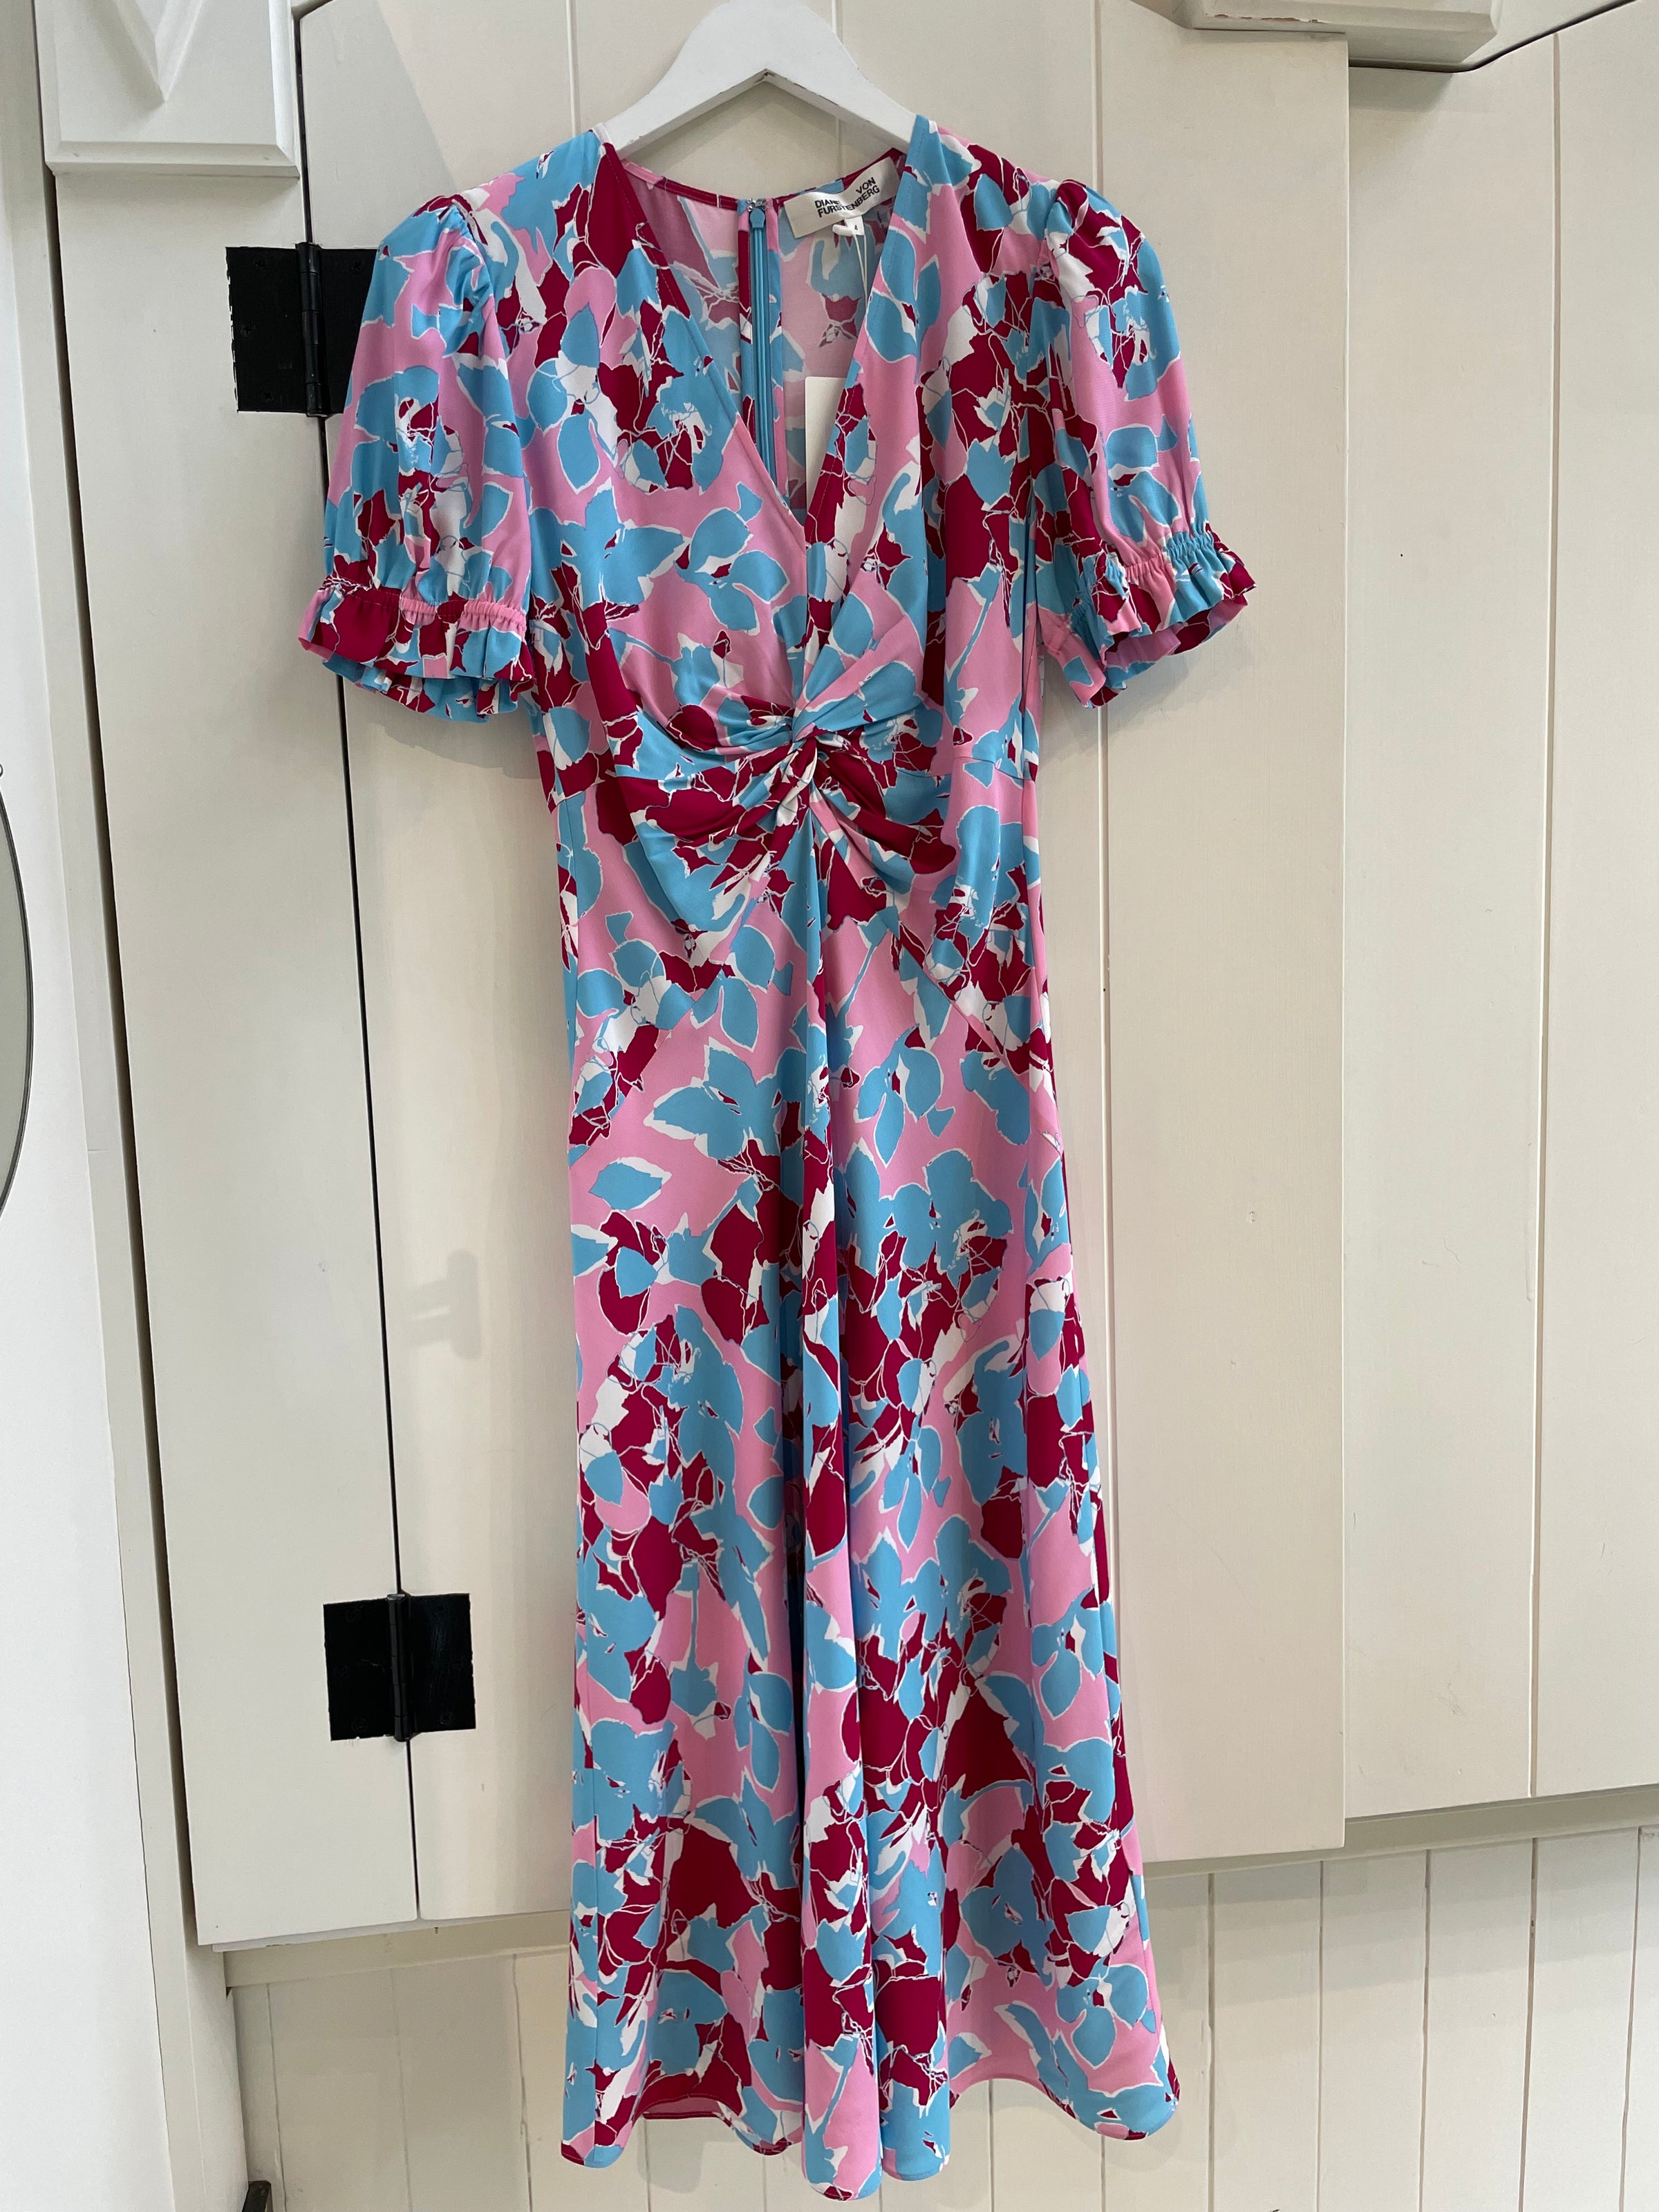 Diane Von Furstenberg - Anaba Dress in Earth Floral Multi Med Pink